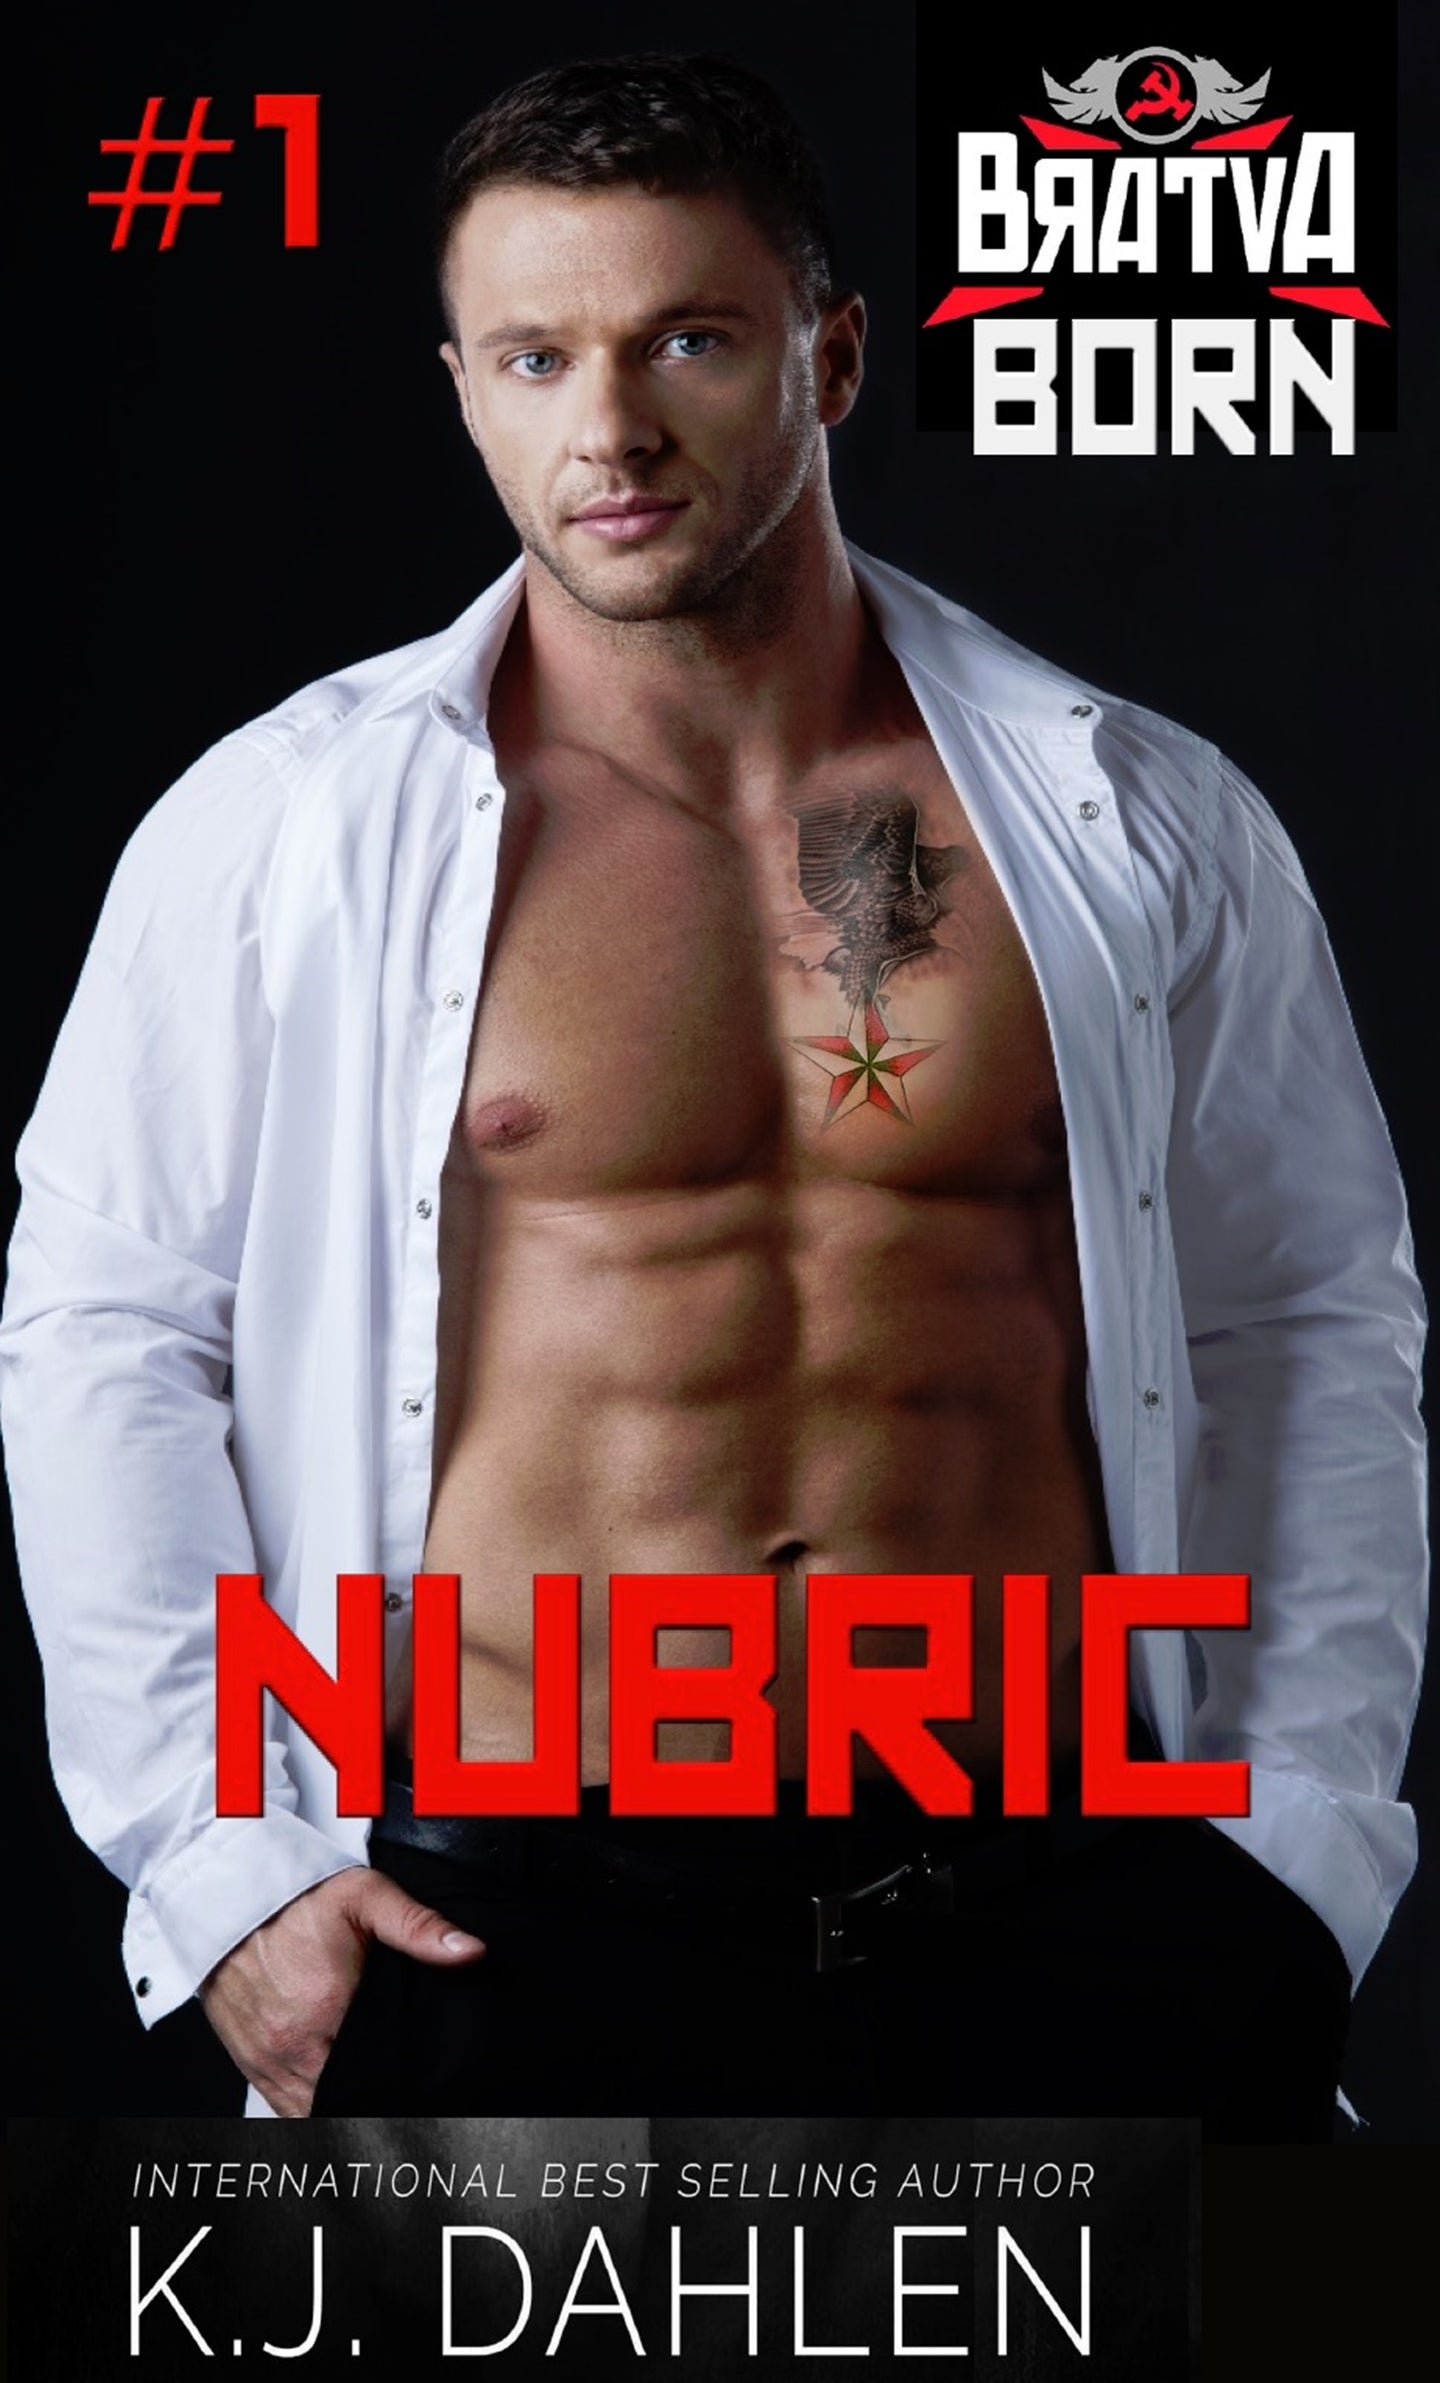 Nubric-Bratva-Born-#1-Single